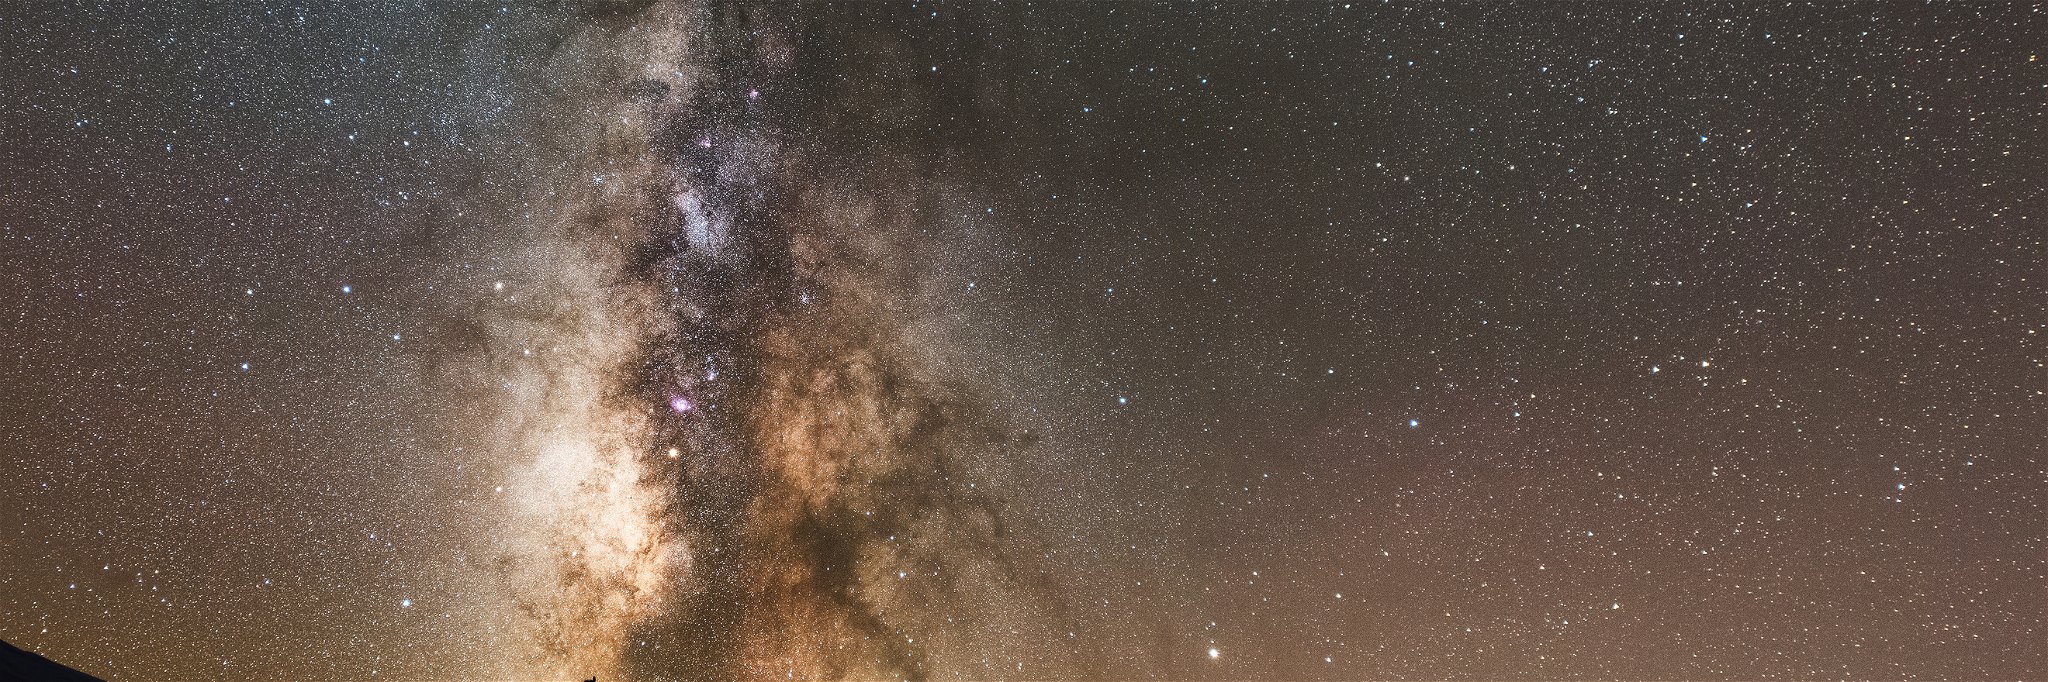 Stargazers looking at the Milky Way Galaxy in an American Dark Sky Park&nbsp;